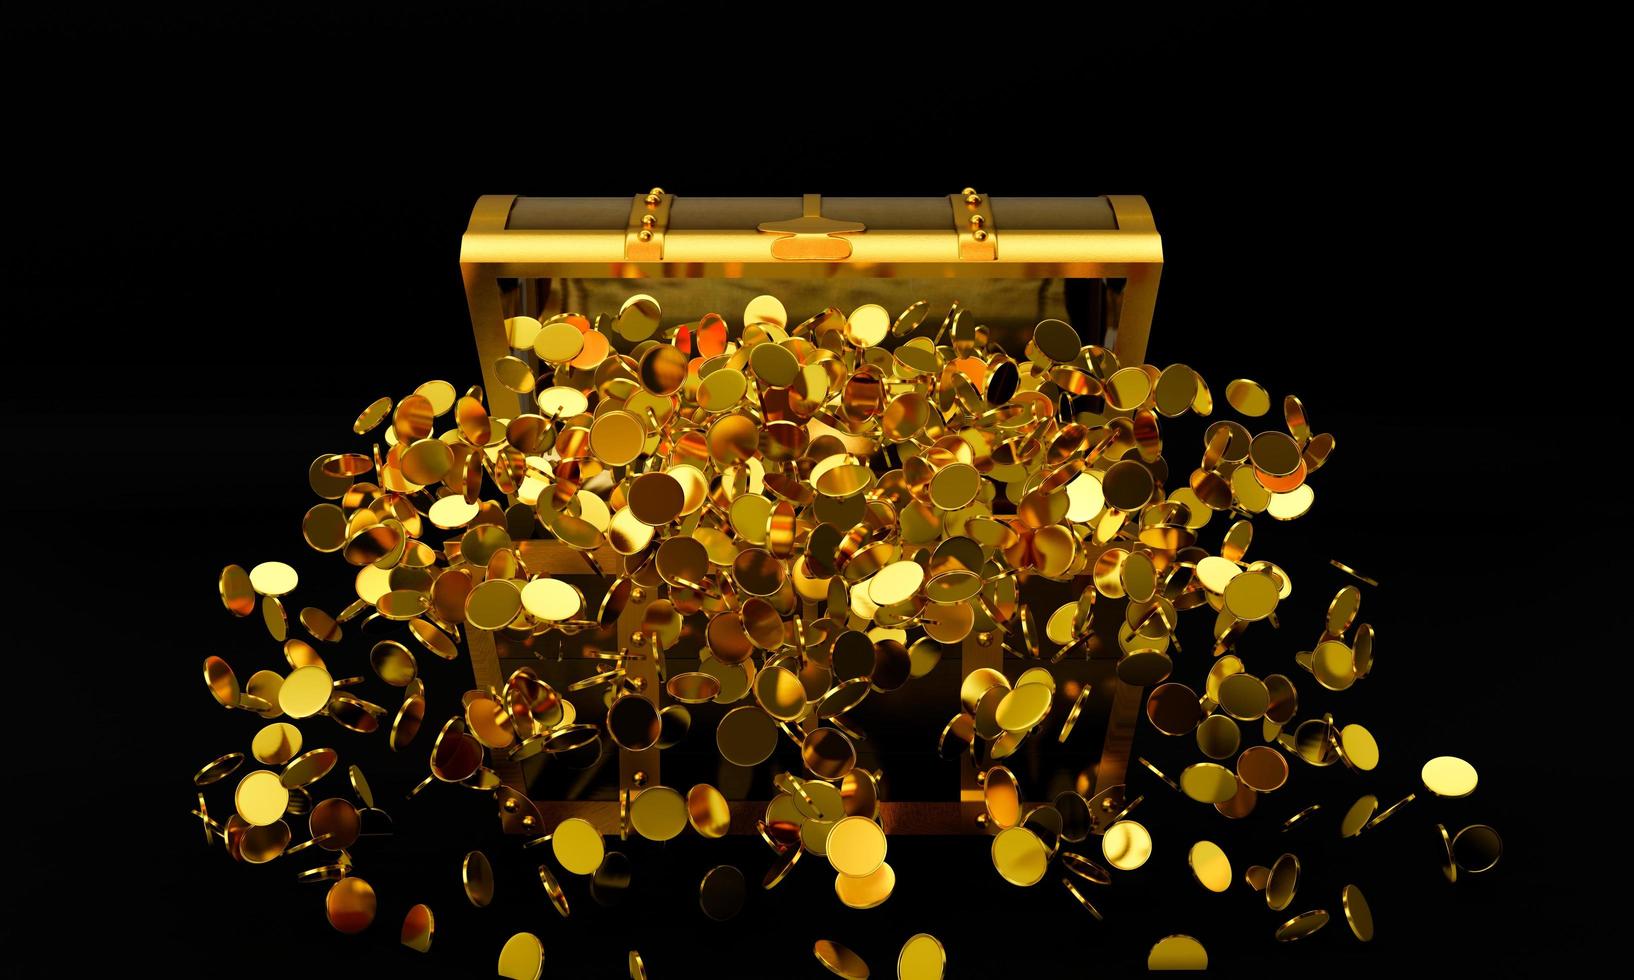 muchos distribuyen monedas de oro que volaron del cofre del tesoro. un cofre del tesoro hecho de oro, lujoso, caro. un antiguo cofre del tesoro abierto con monedas de oro expulsadas. representación 3d foto